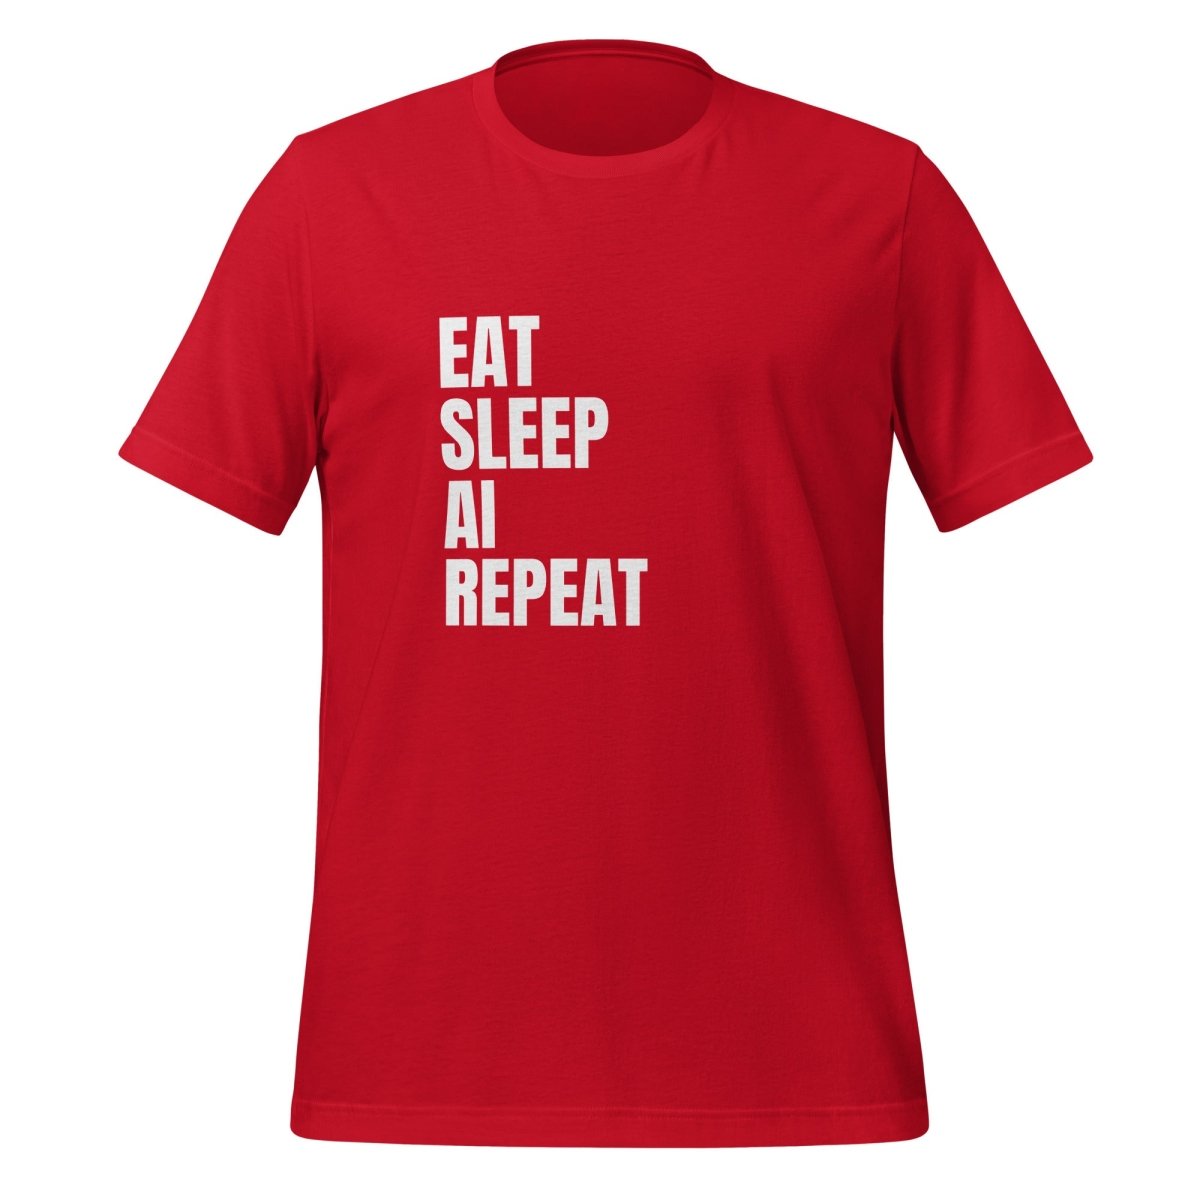 EAT SLEEP AI REPEAT T - Shirt 1 (unisex) - Red - AI Store